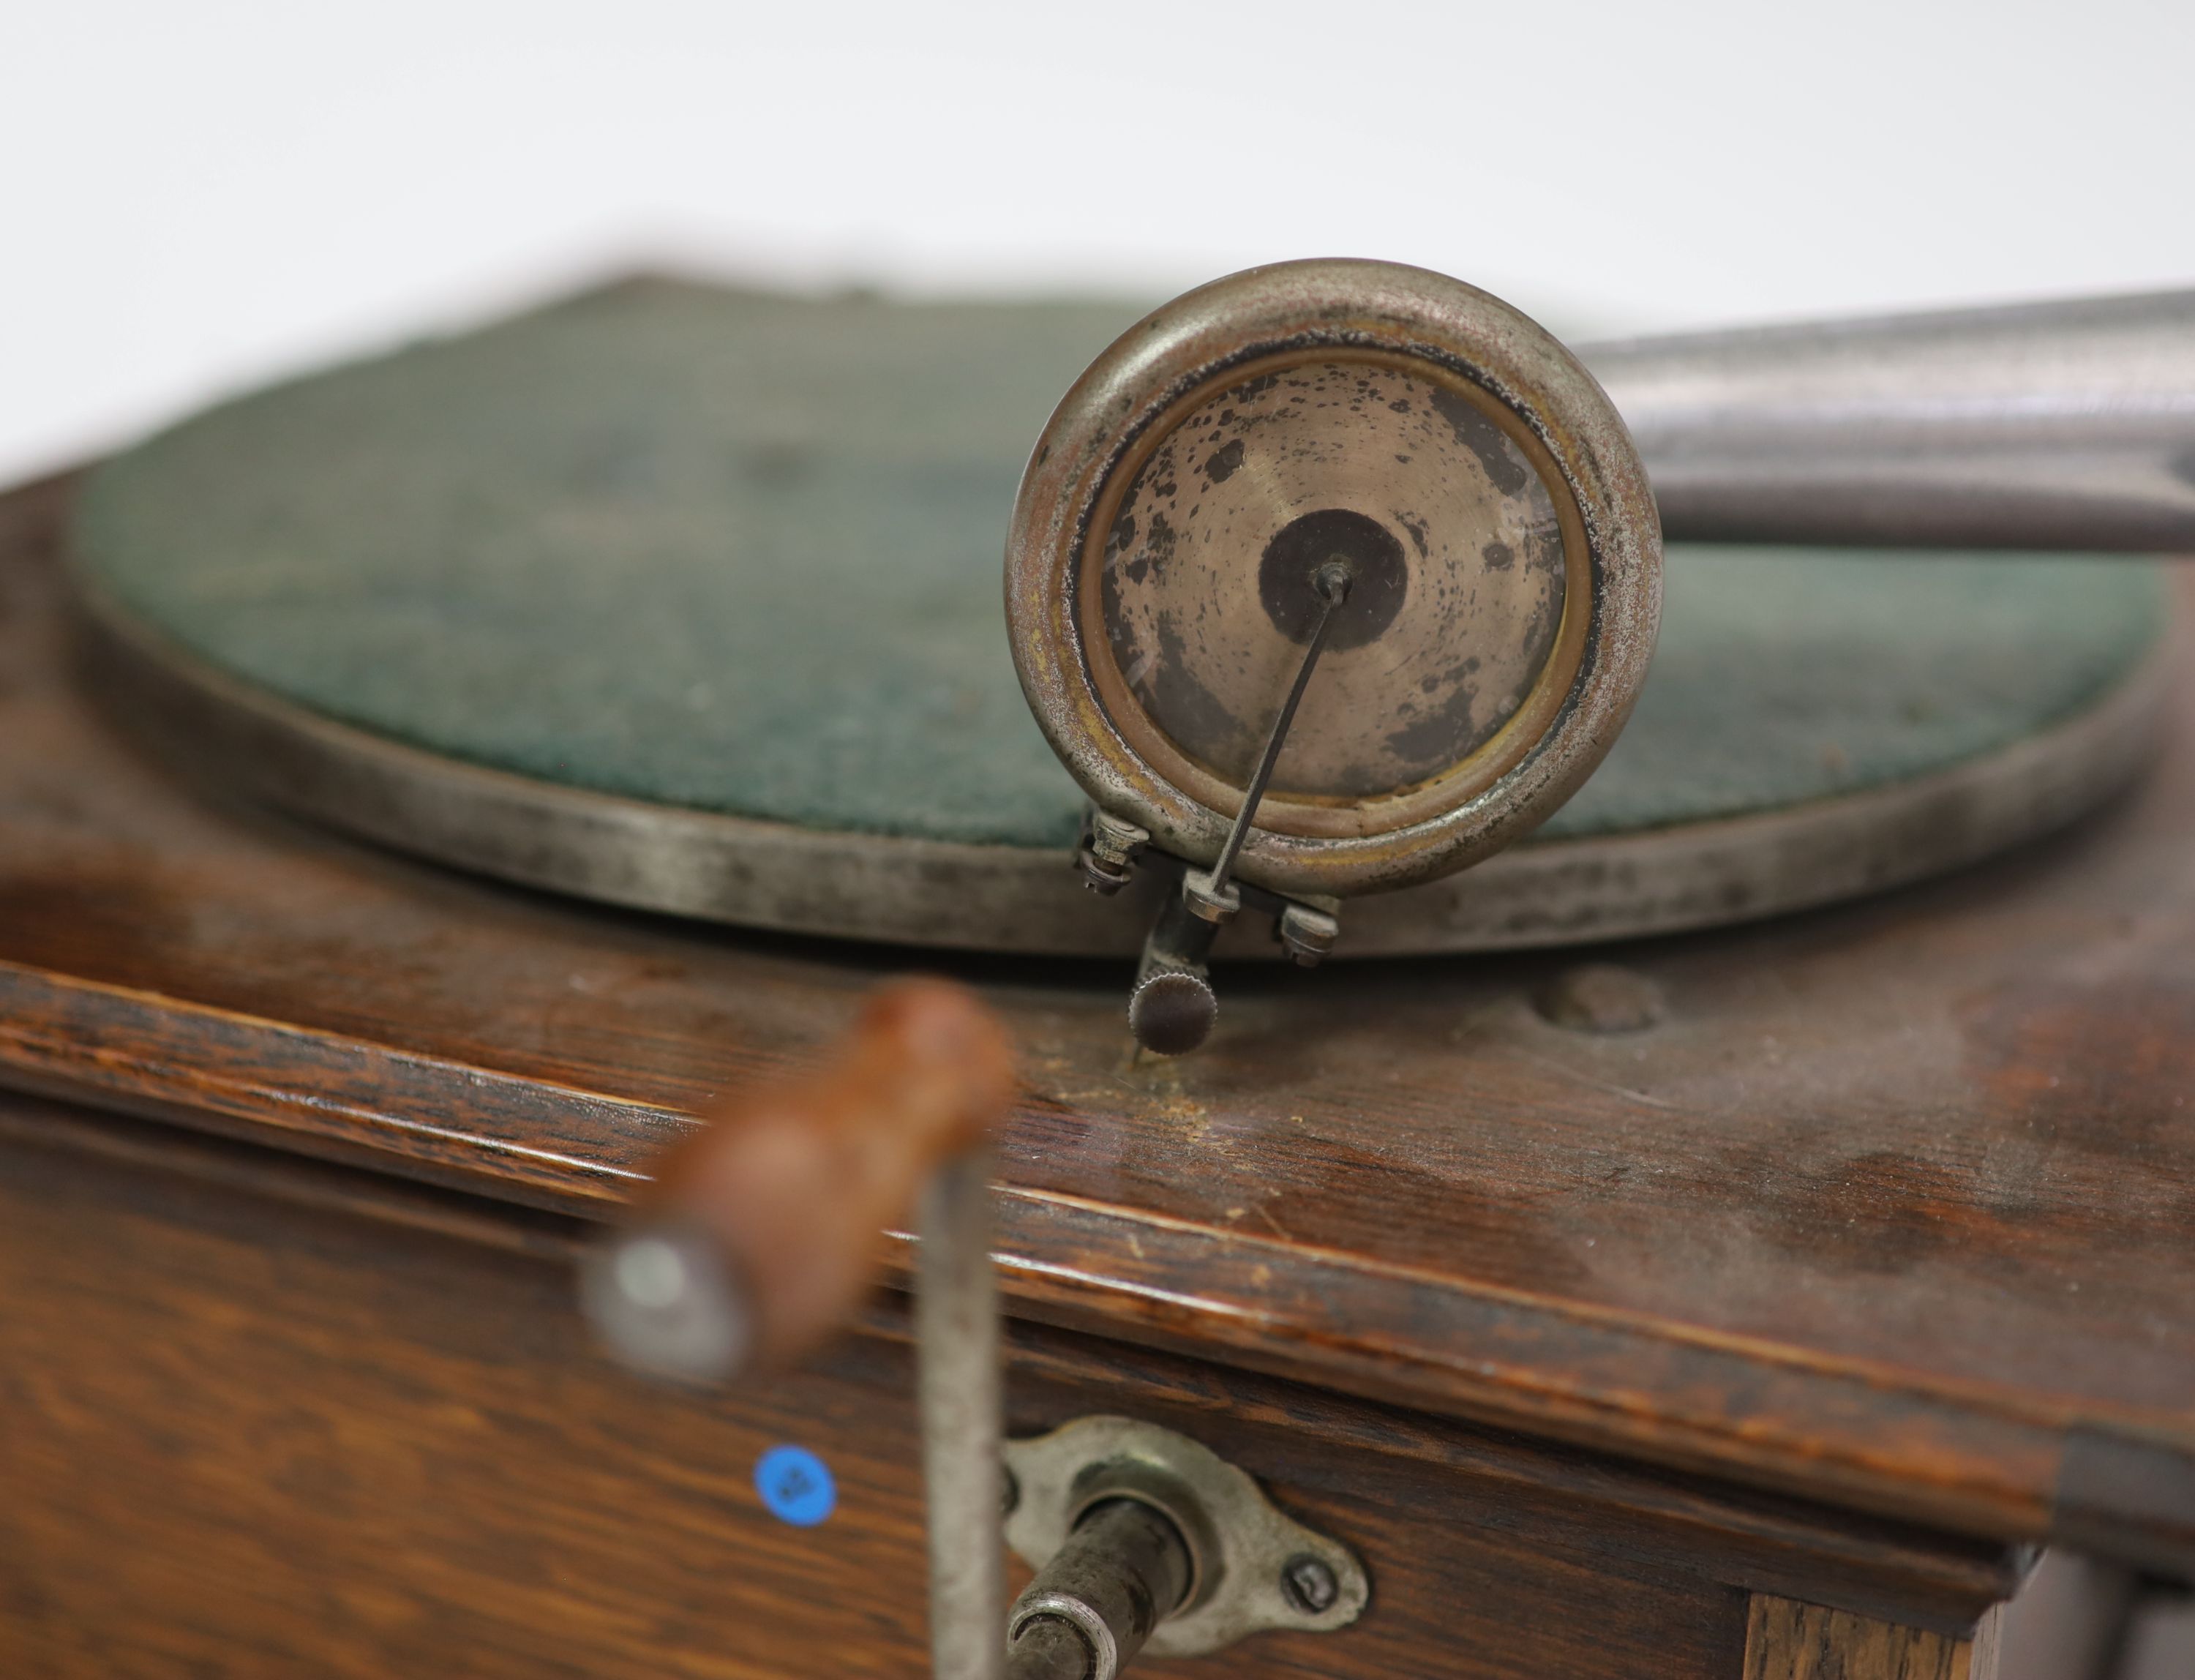 An Edwardian oak cased Columbia gramophone 70cm high.